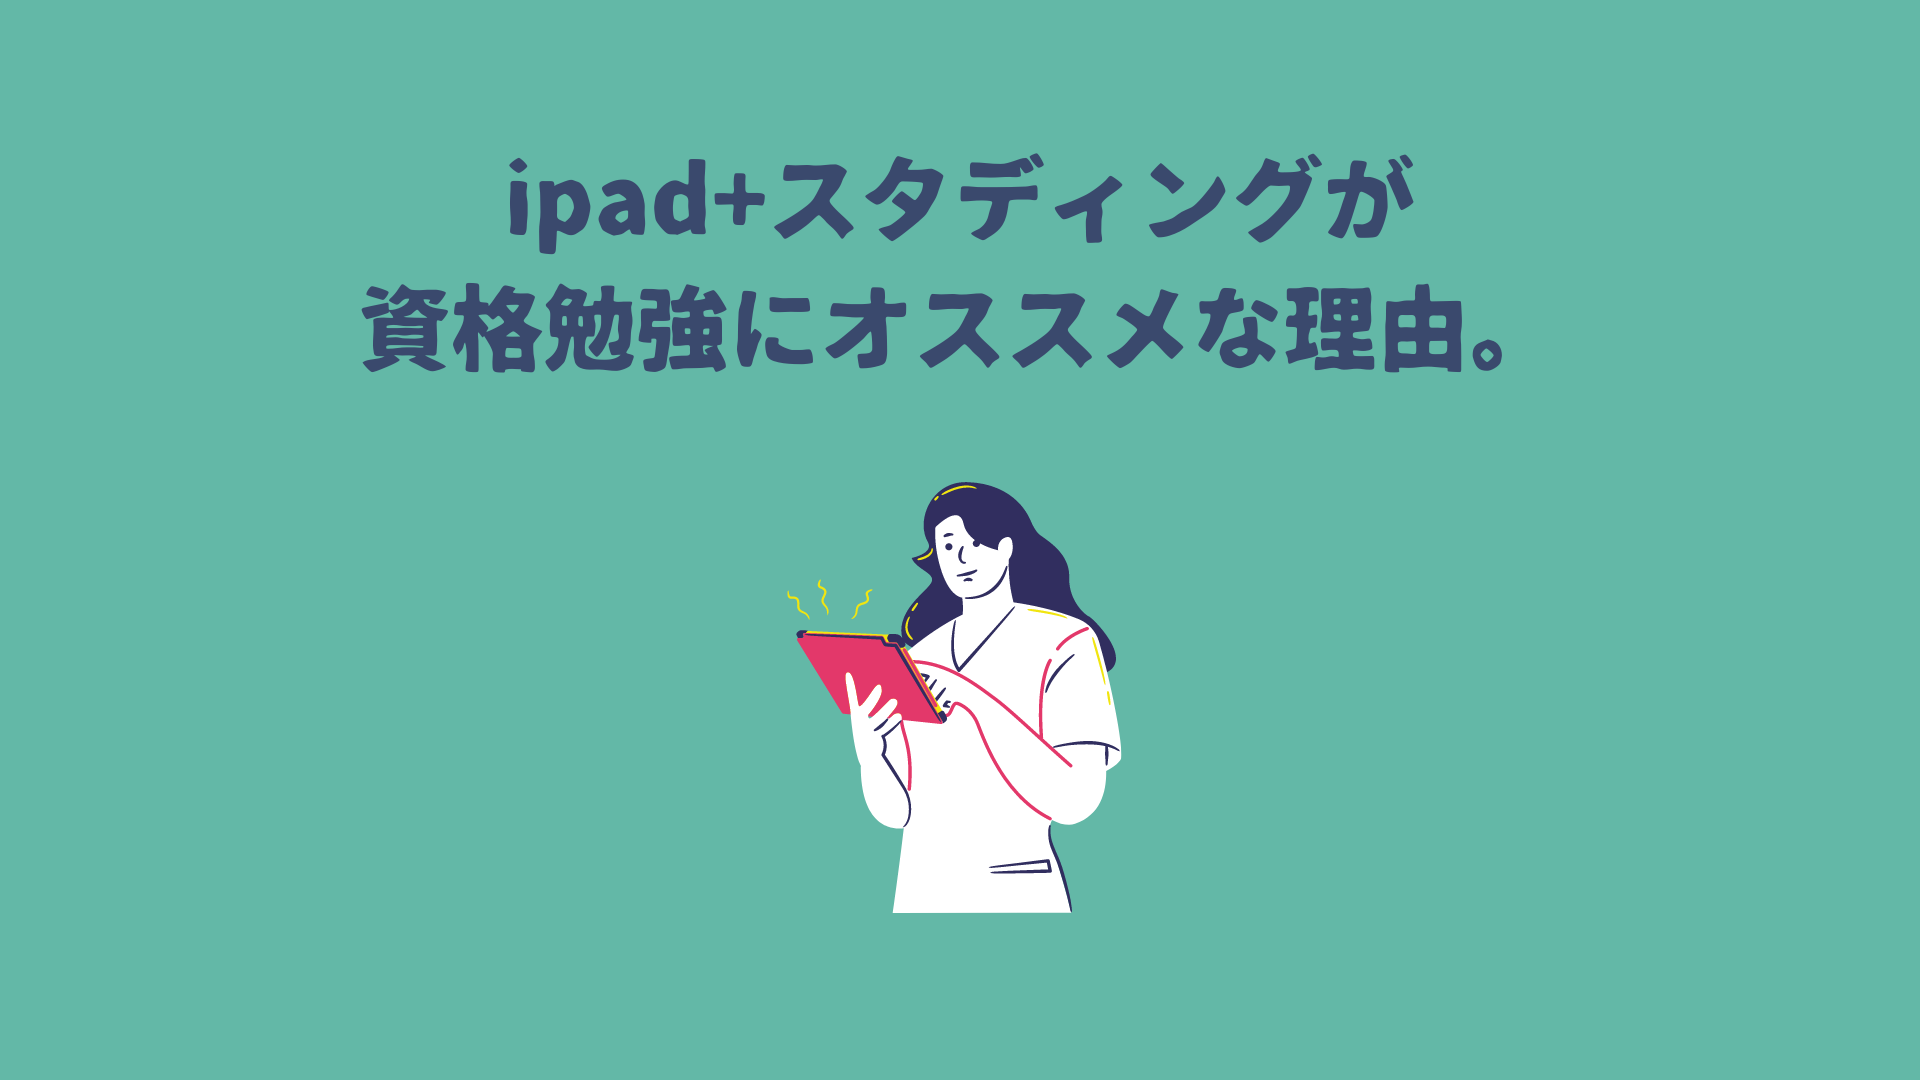 Ipad スタディングが資格勉強にオススメな理由 ユユハラの早起き 習慣化メソッド